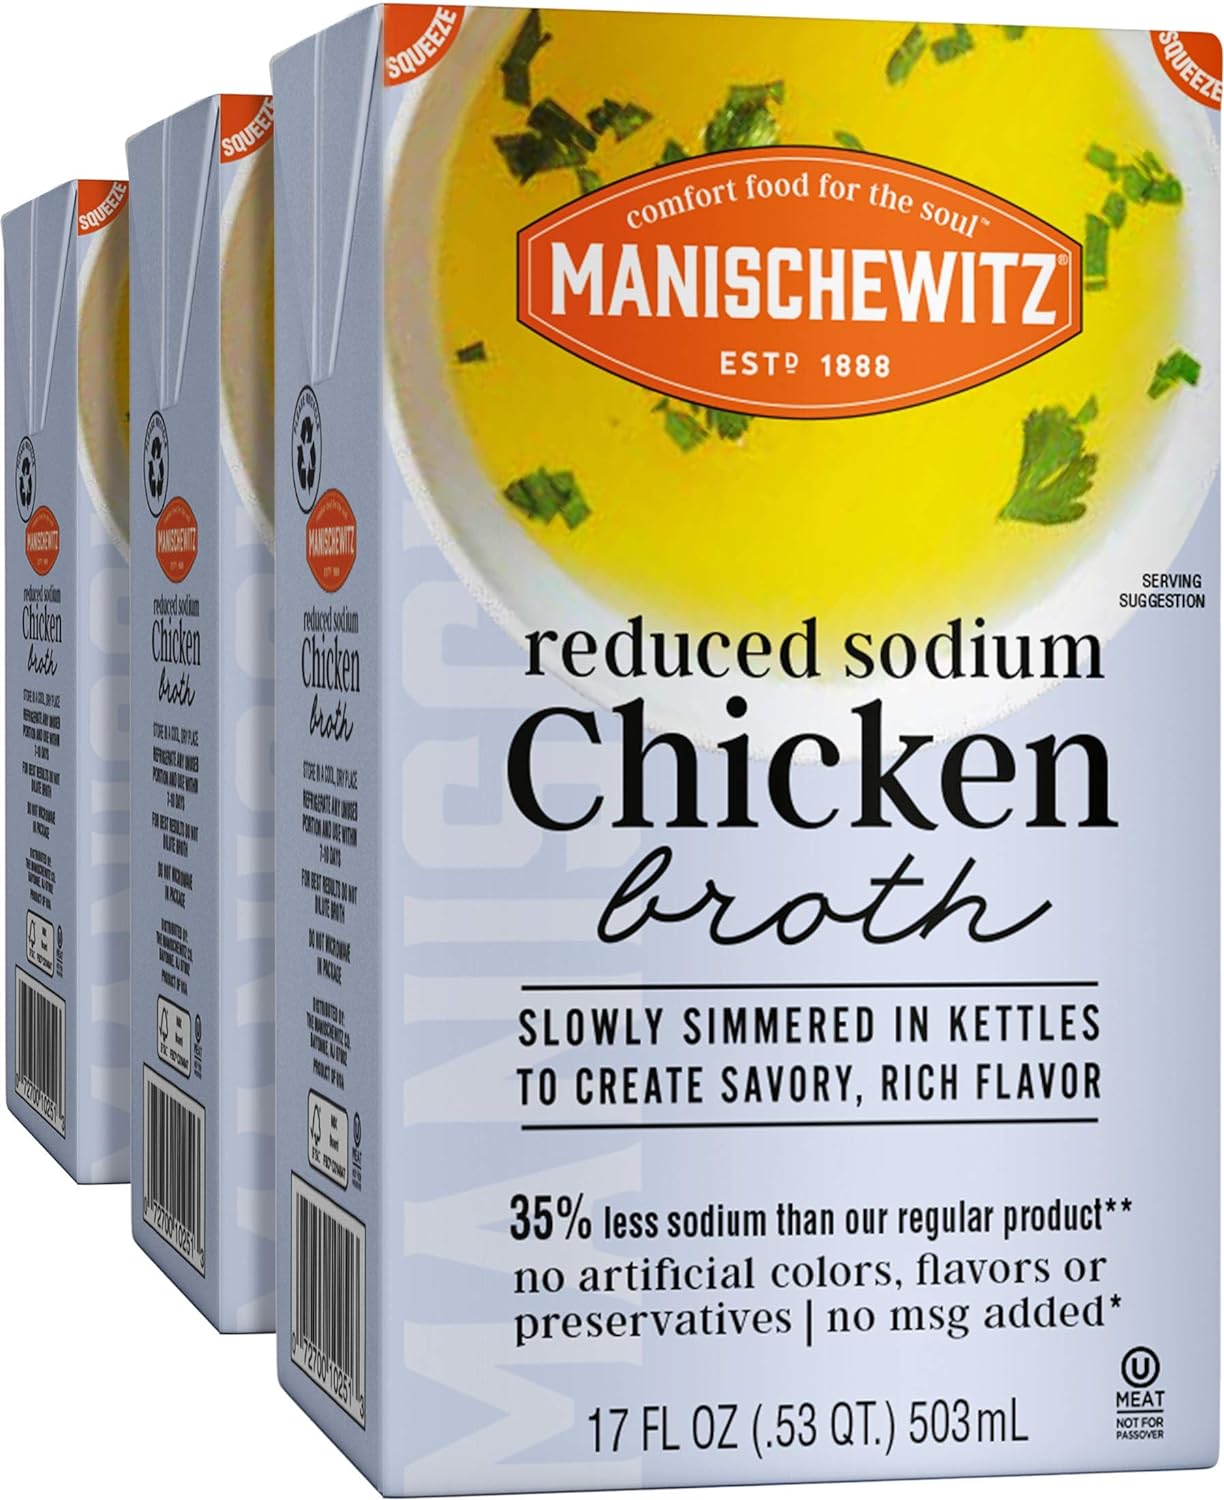 Manischewitz Reduced Sodium Chicken Broth 17oz (3 Pack), Flavorful, Kettle Cooked, Slowly Simmered